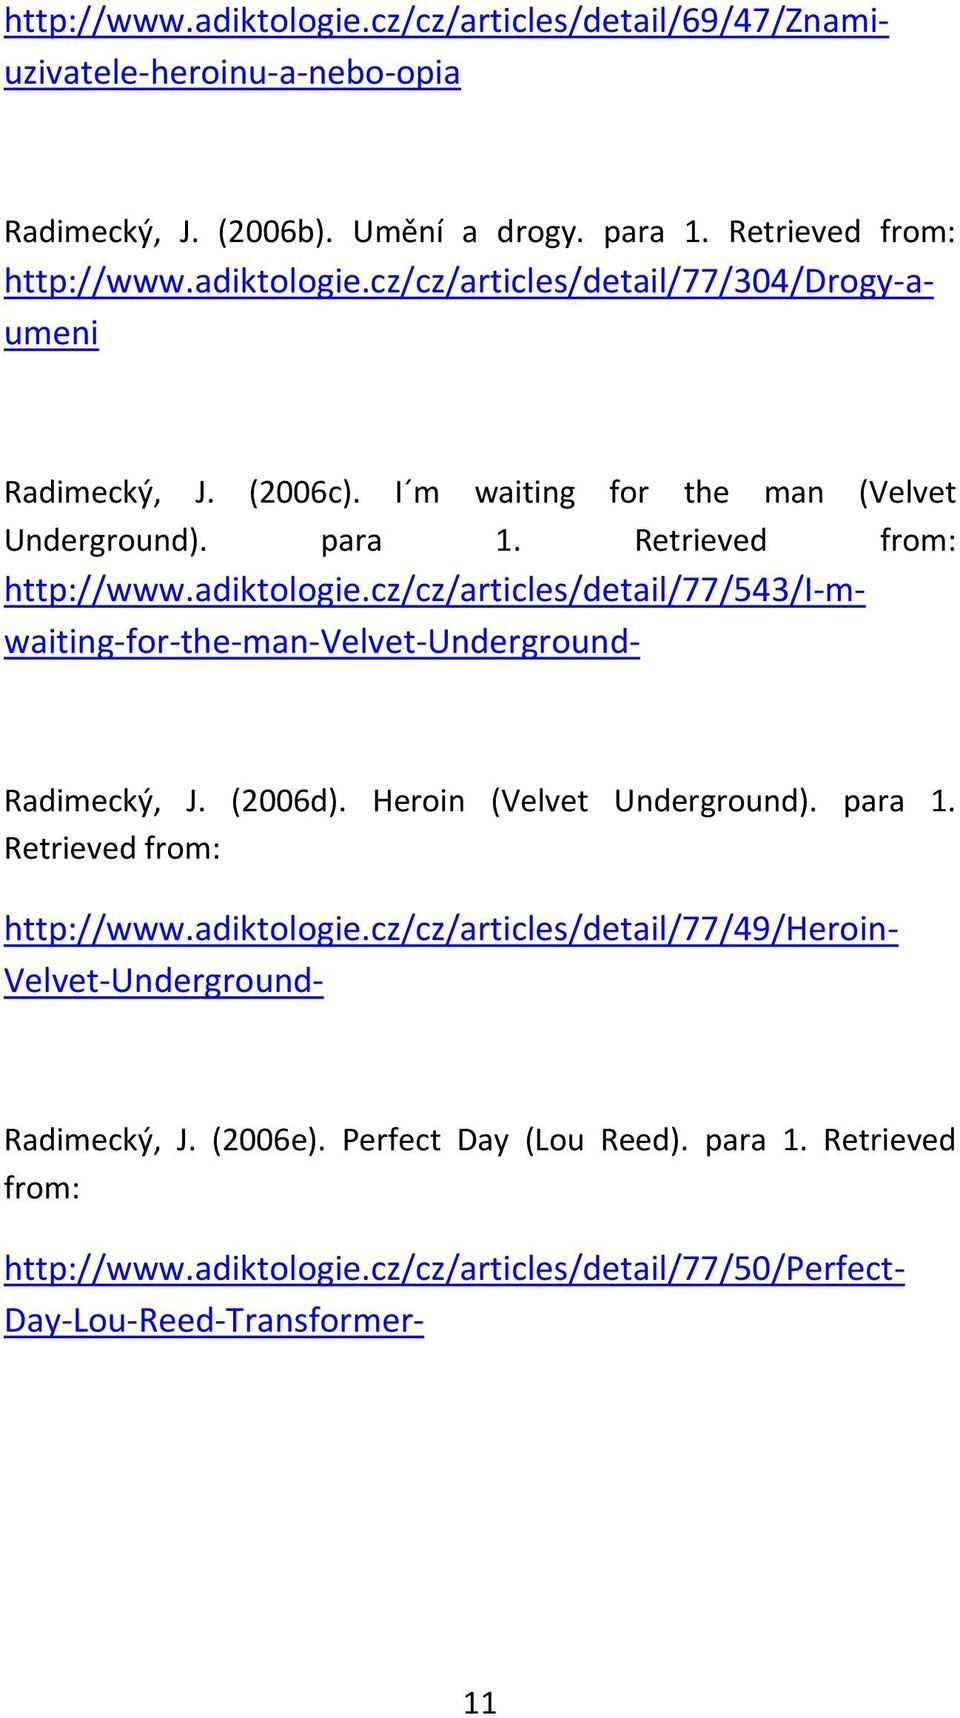 cz/cz/articles/detail/77/543/i m waiting for the man Velvet Underground http://www.adiktologie.cz/cz/articles/detail/77/49/heroin Velvet Underground Radimecký, J. (2006e).